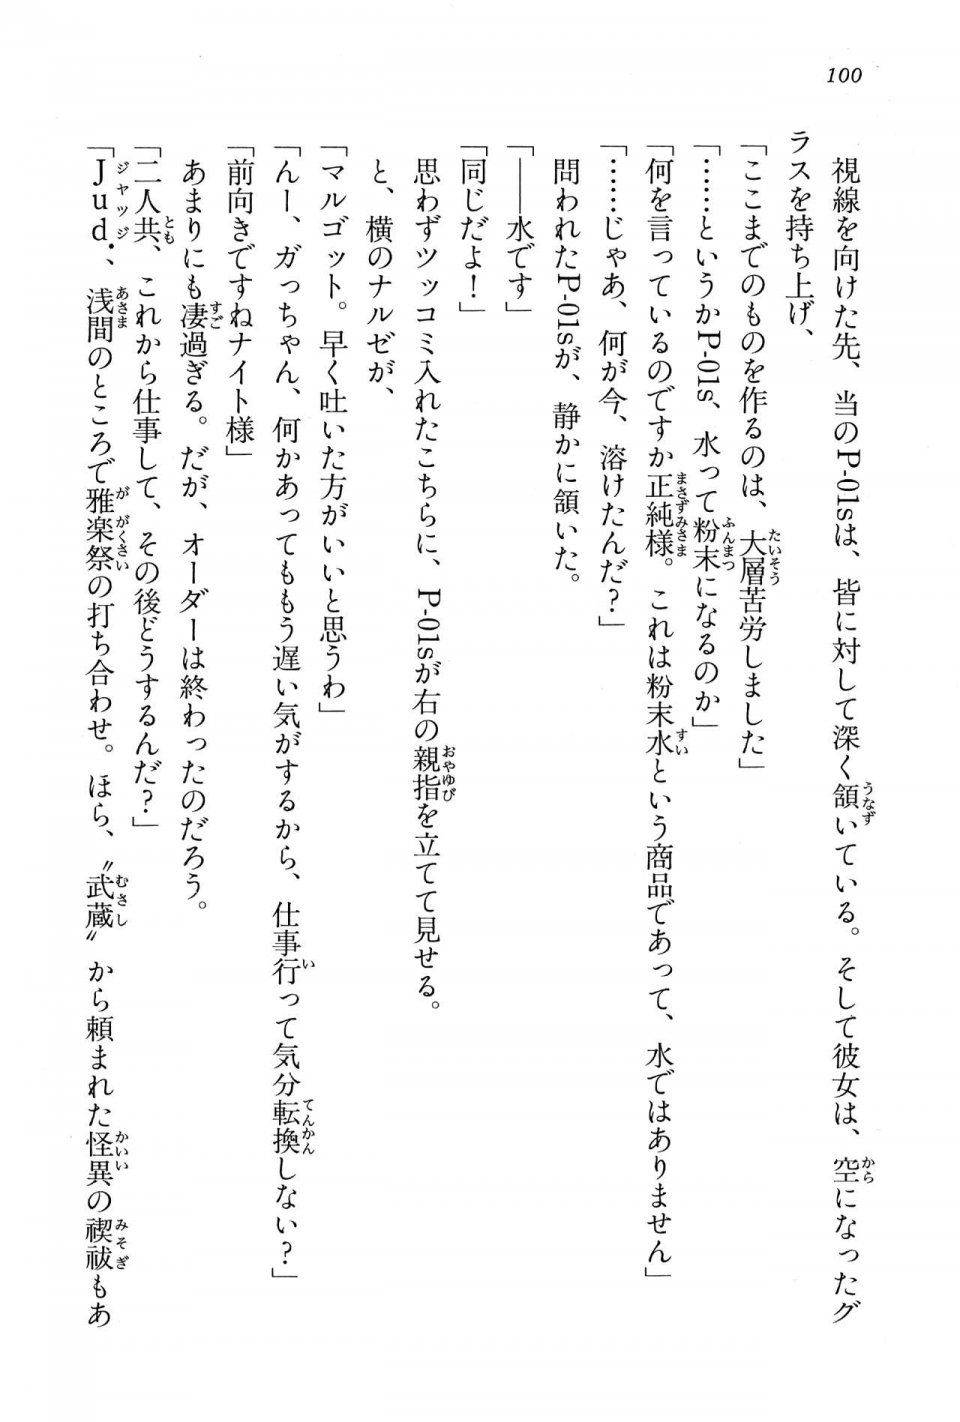 Kyoukai Senjou no Horizon BD Special Mininovel Vol 6(3B) - Photo #104